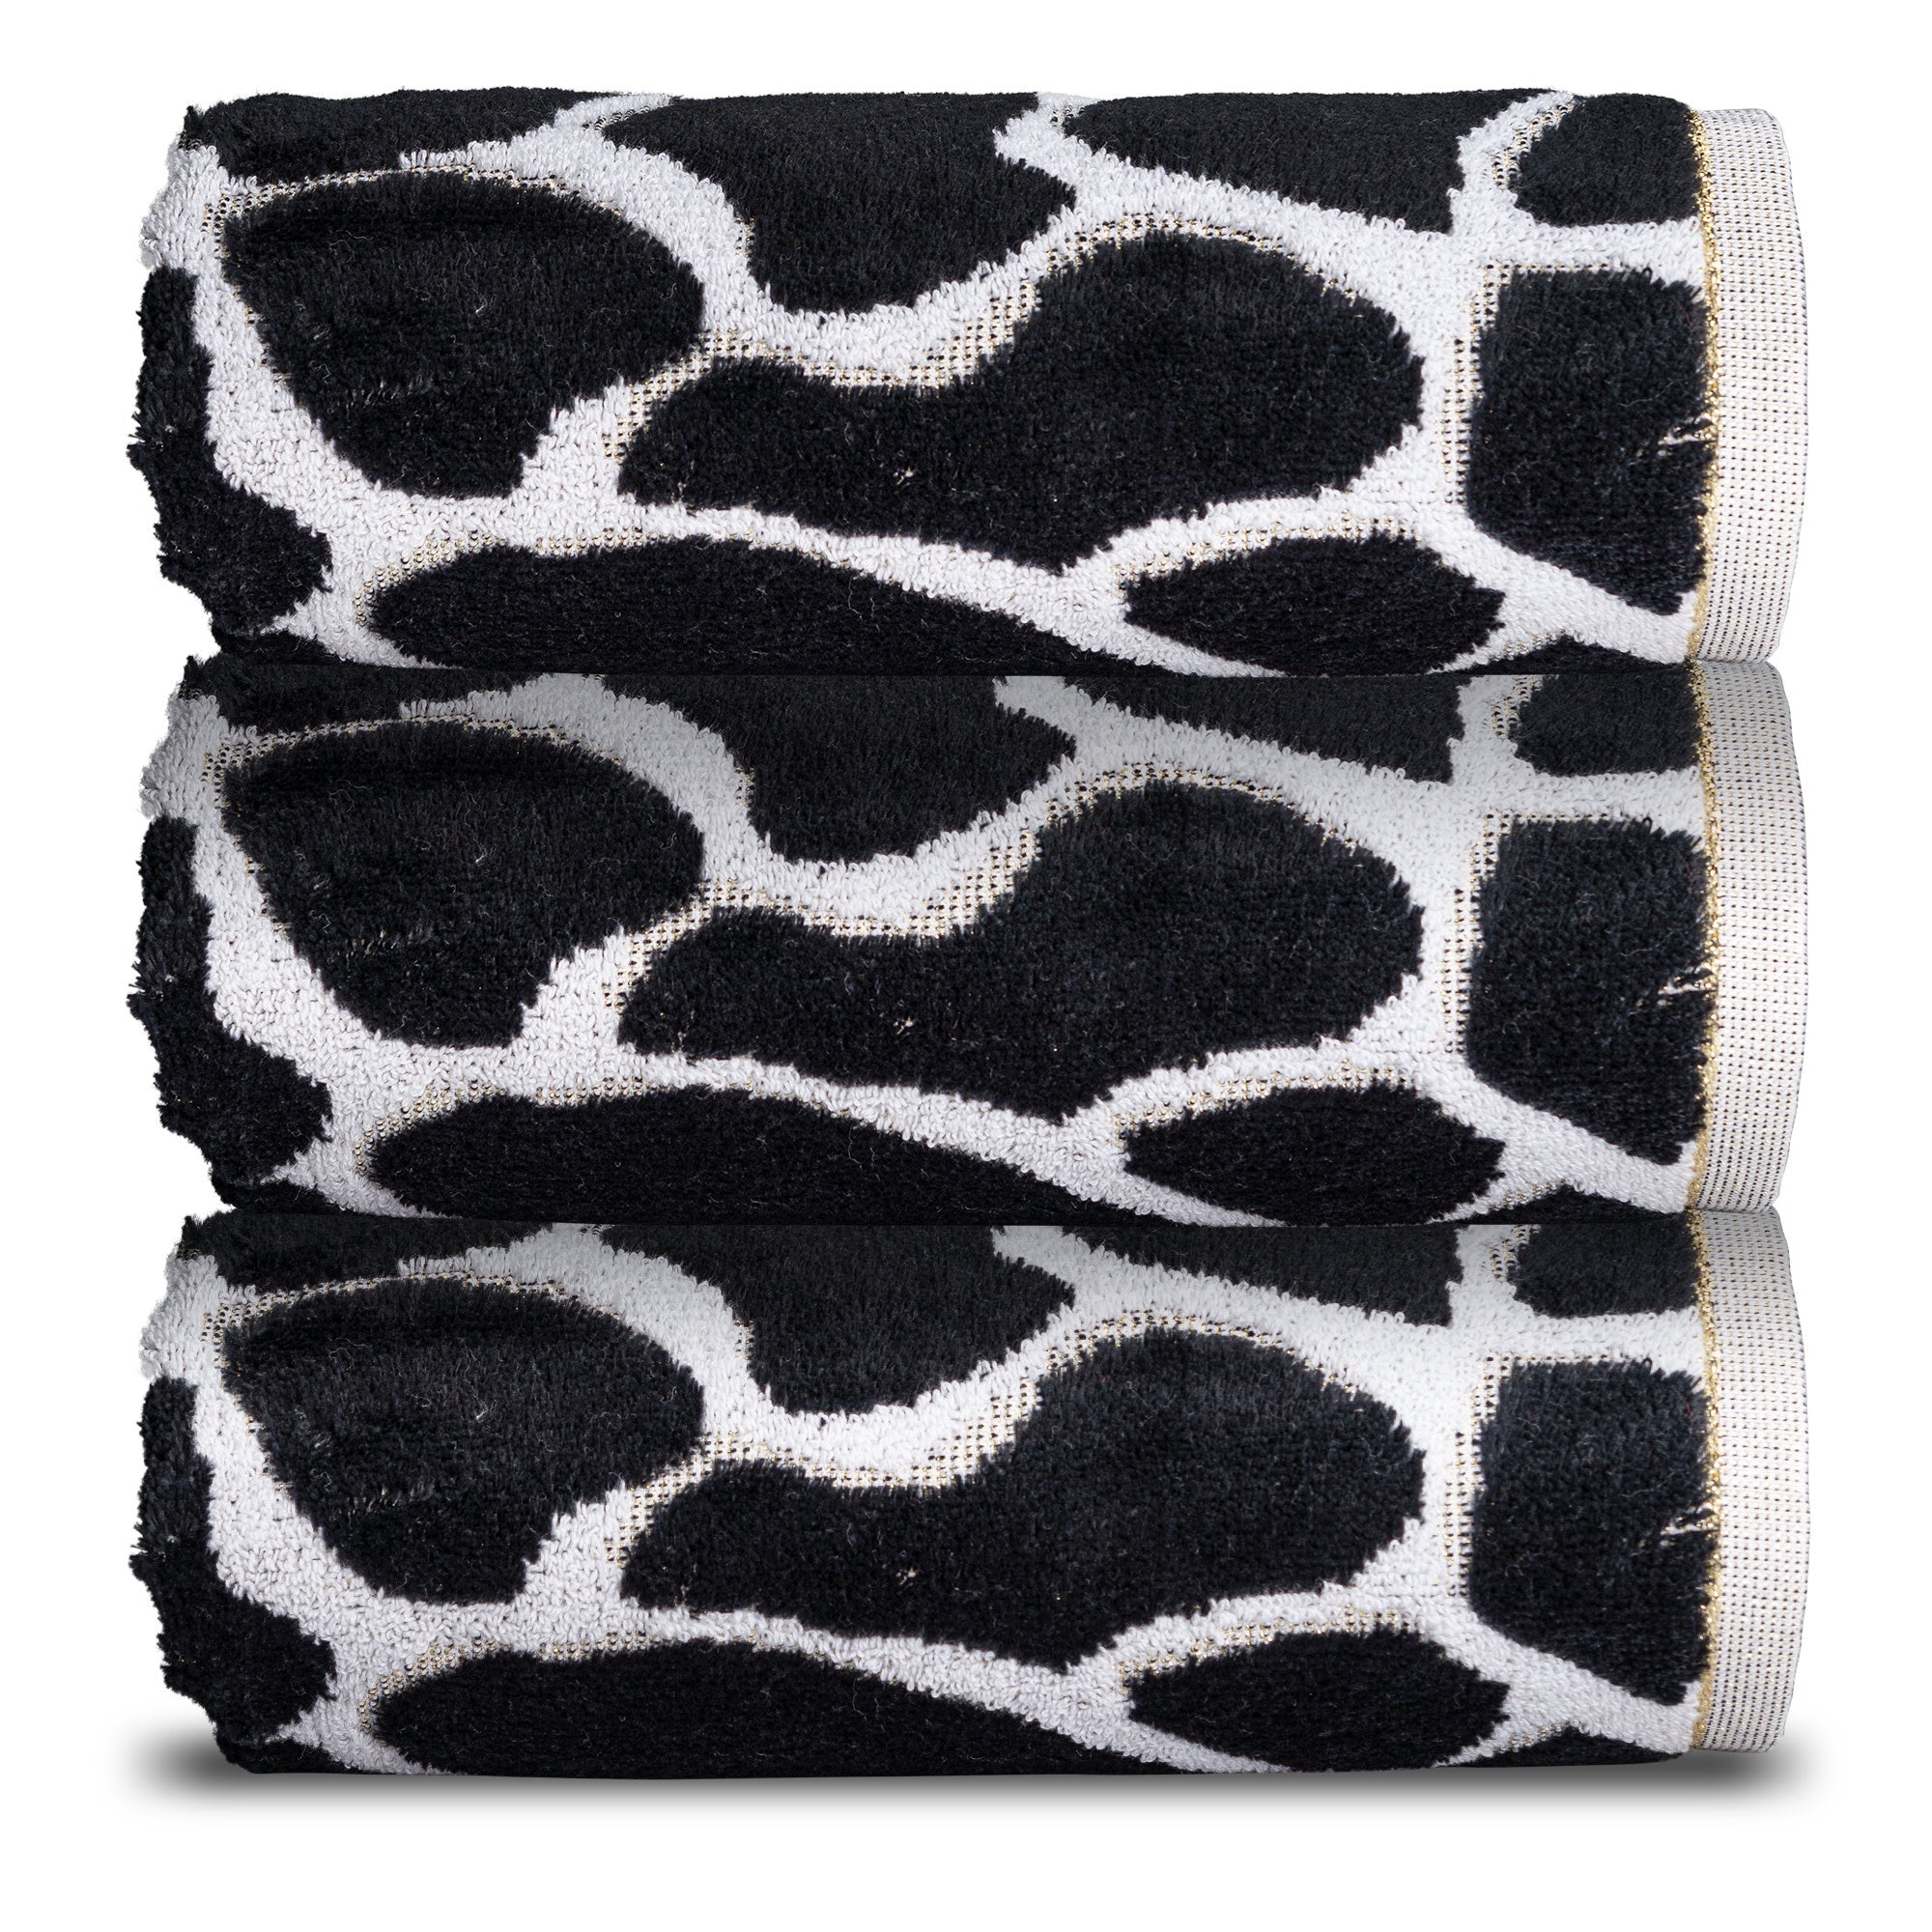 Leopard Towel Black